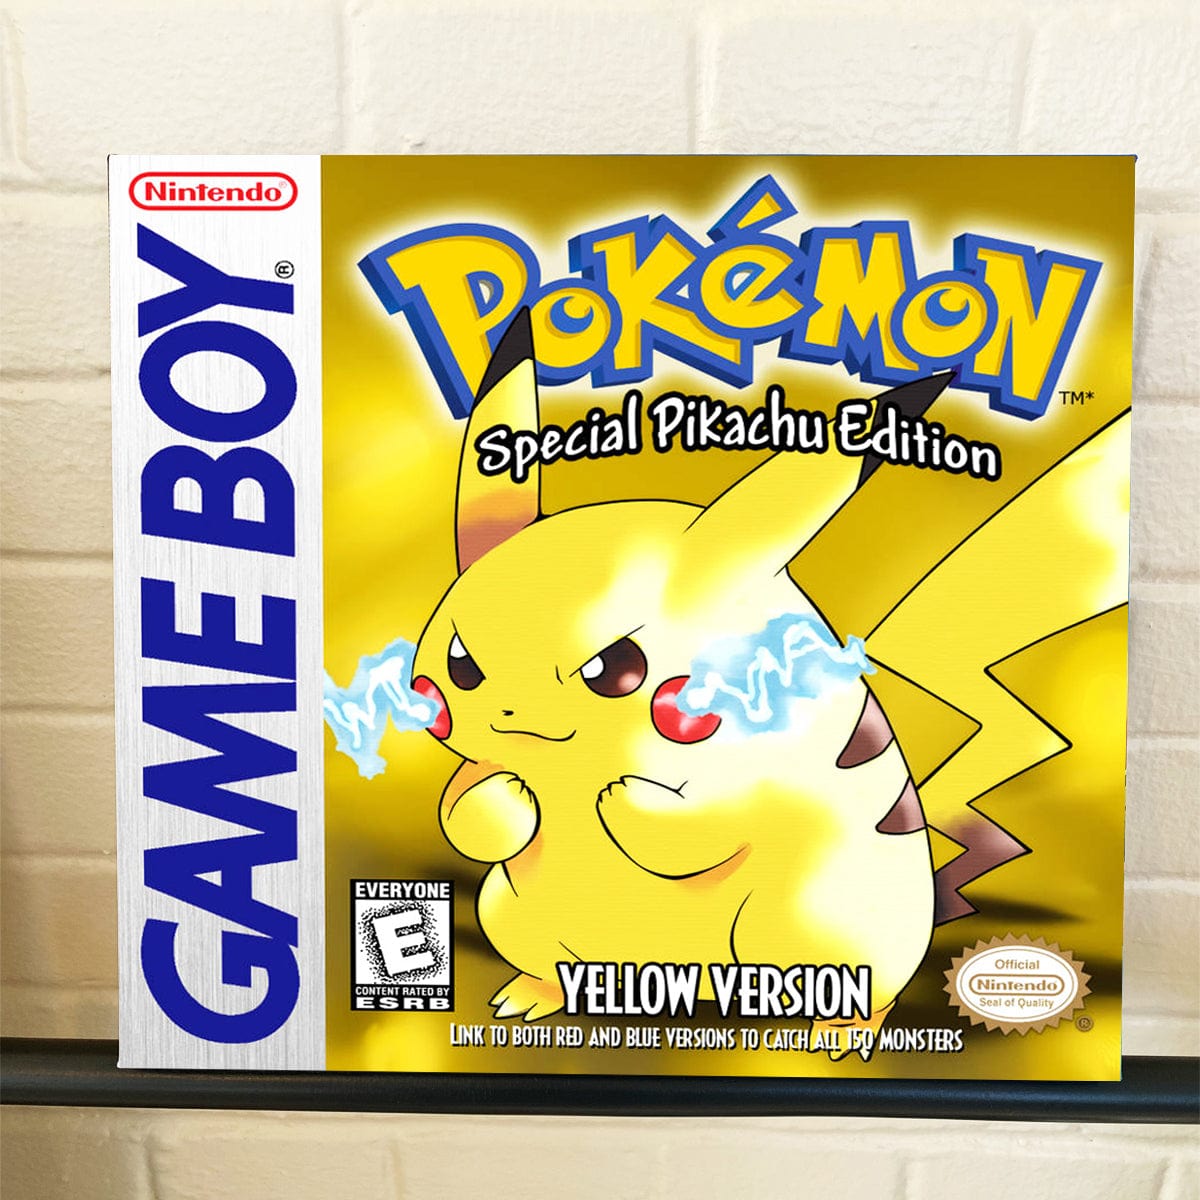 Pokemon Thunder Yellow Version Game Boy Advance Box Art Cover by Merrulas